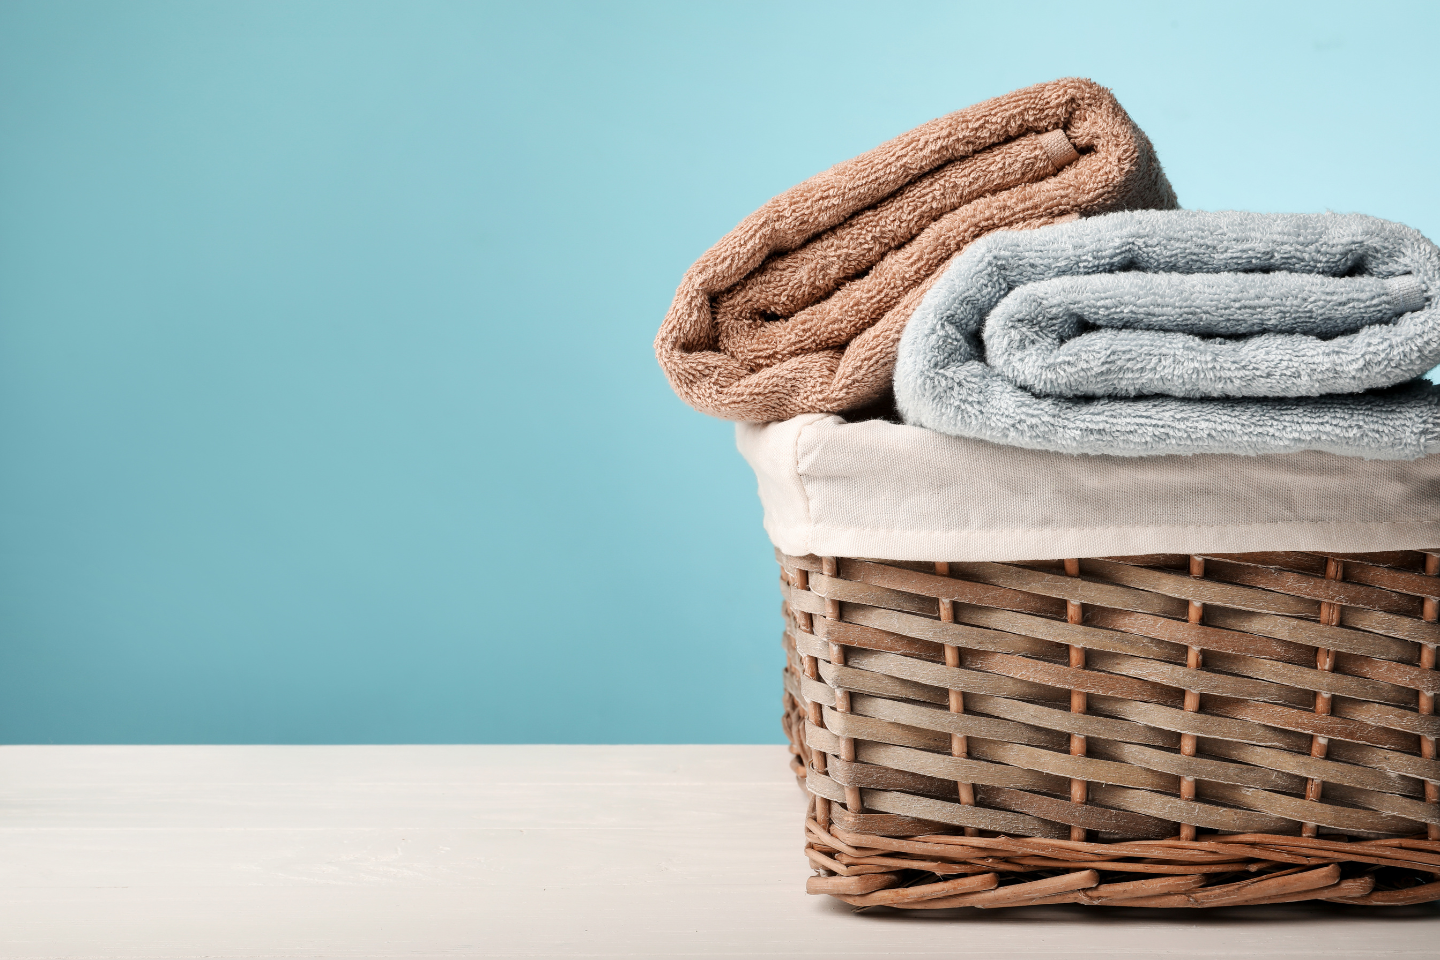 Wicker laundry basket with folded laundry on blue background